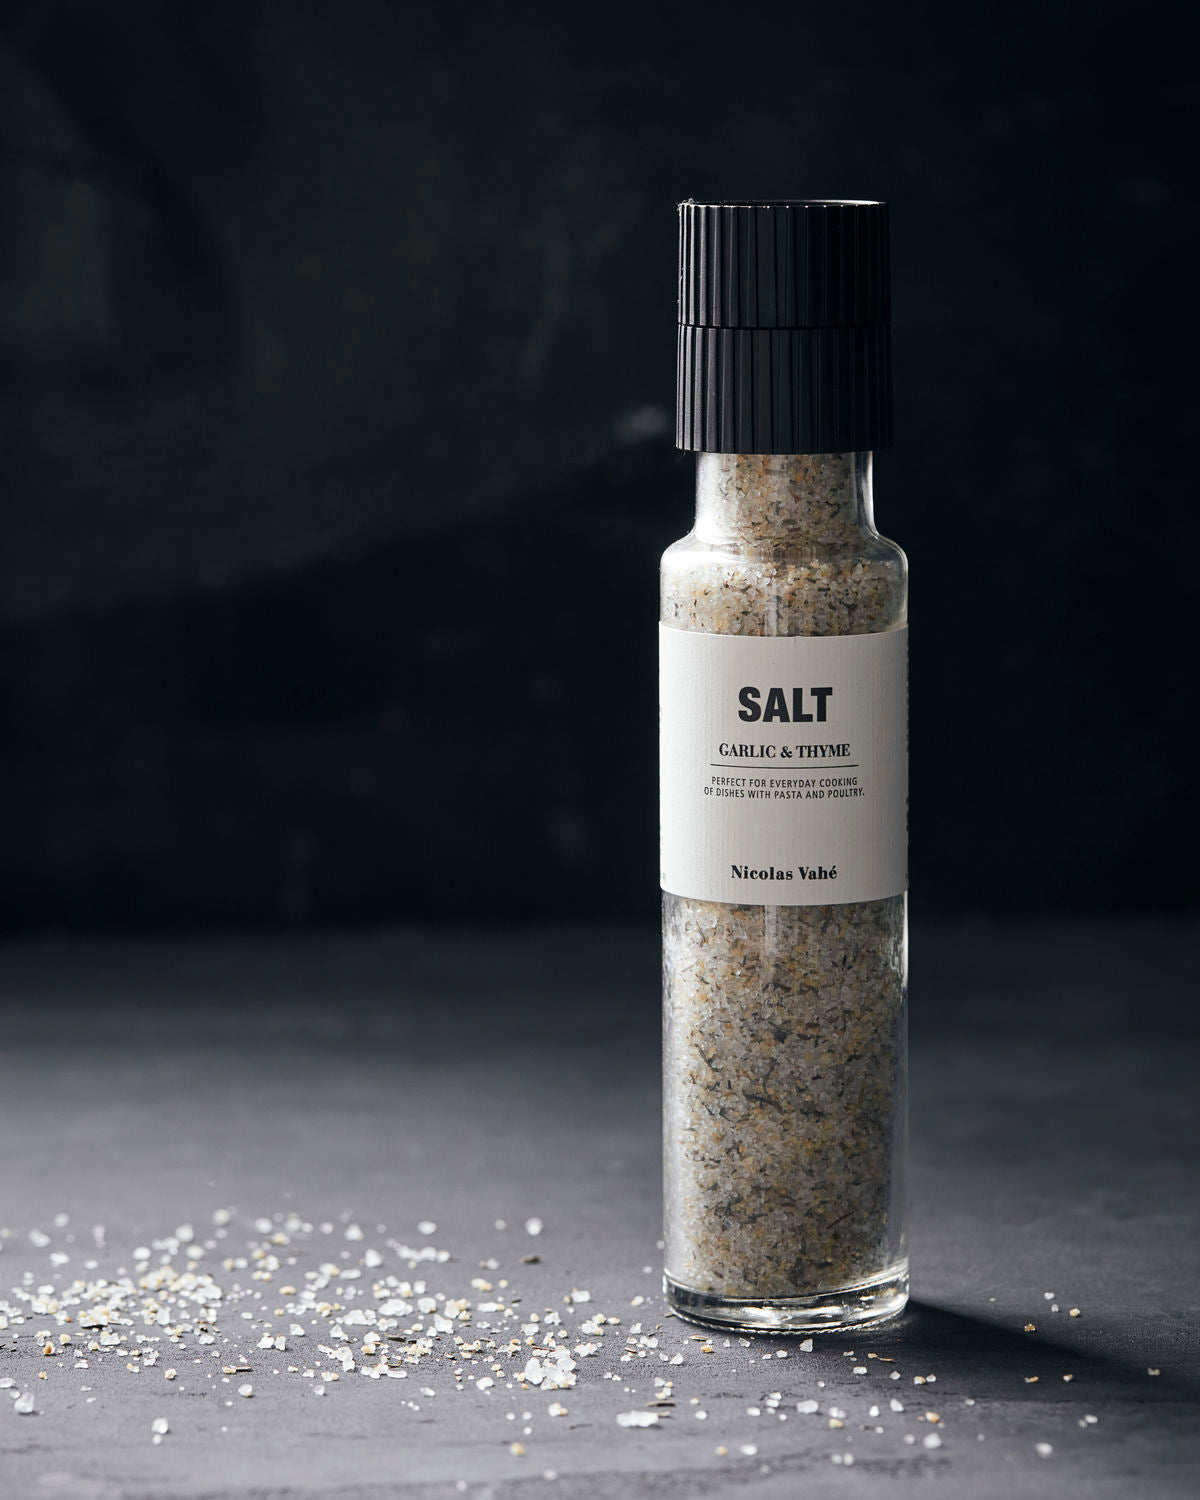 Garlic & Thyme Salt